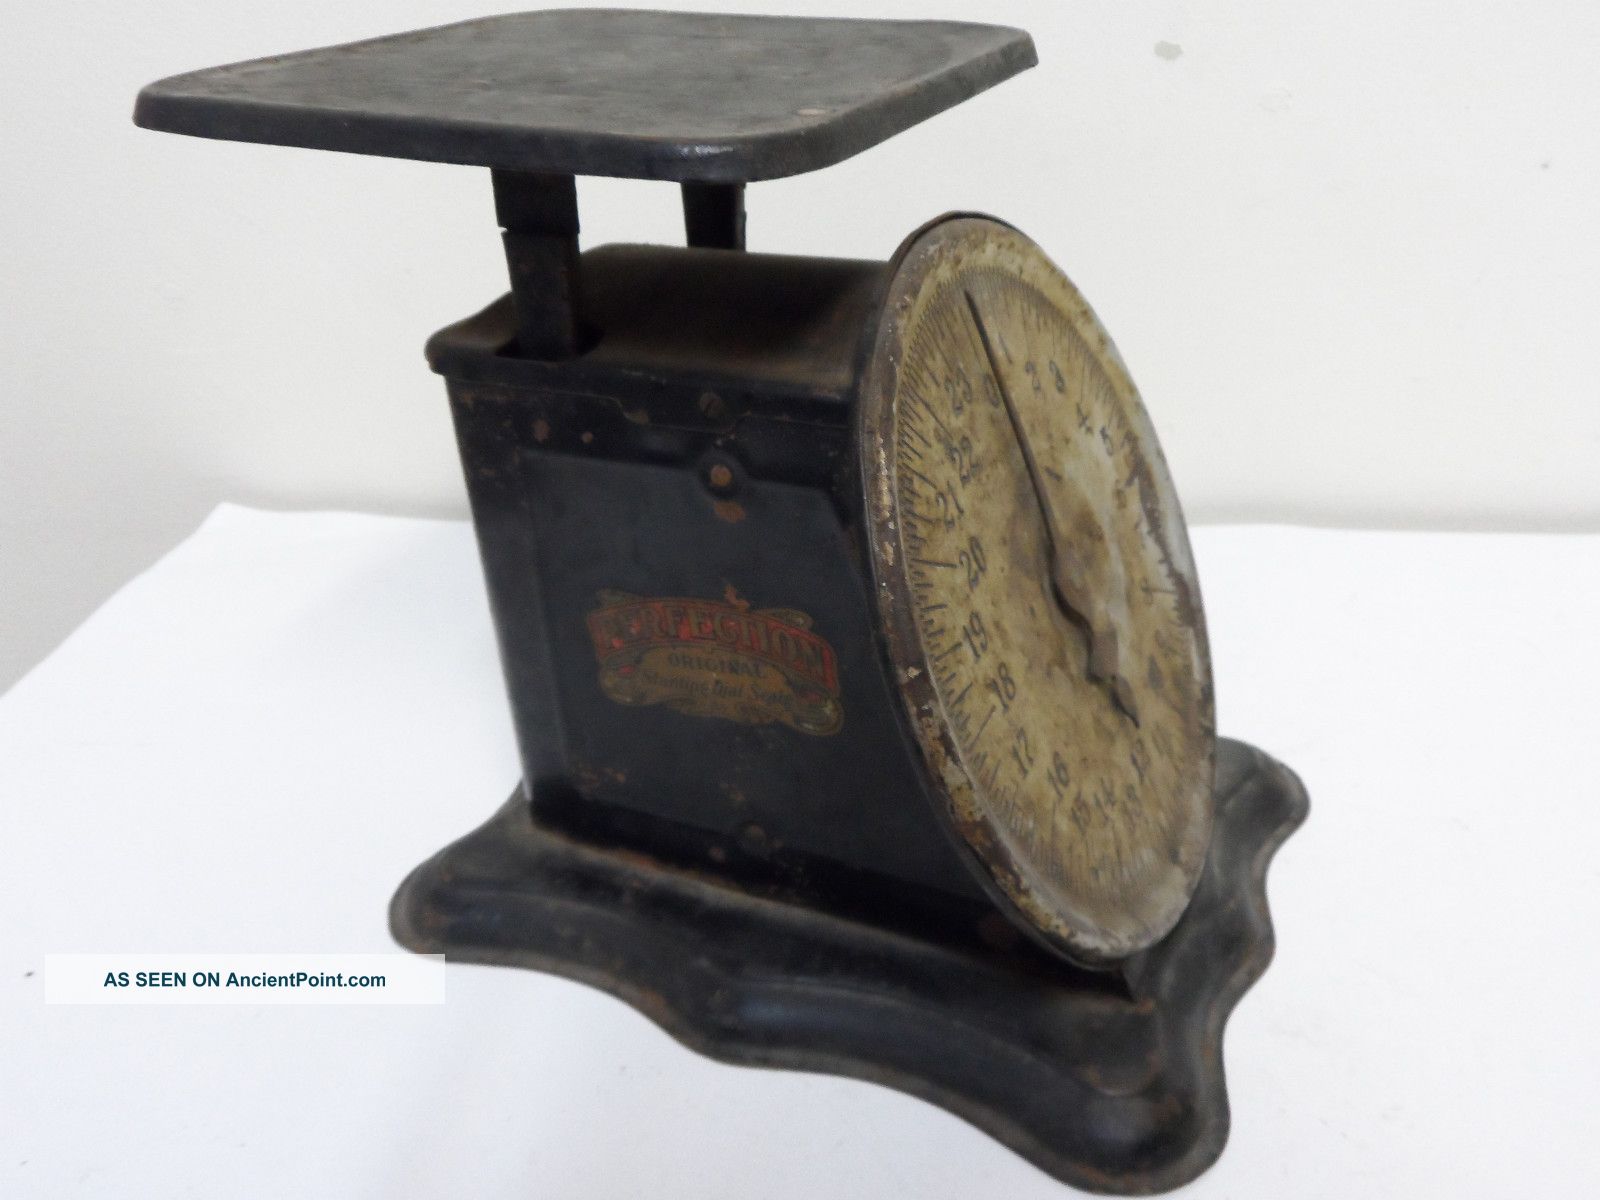 Antique Perfection Slanting Dial Scale 1906 Usa Vintage Primitive Other photo